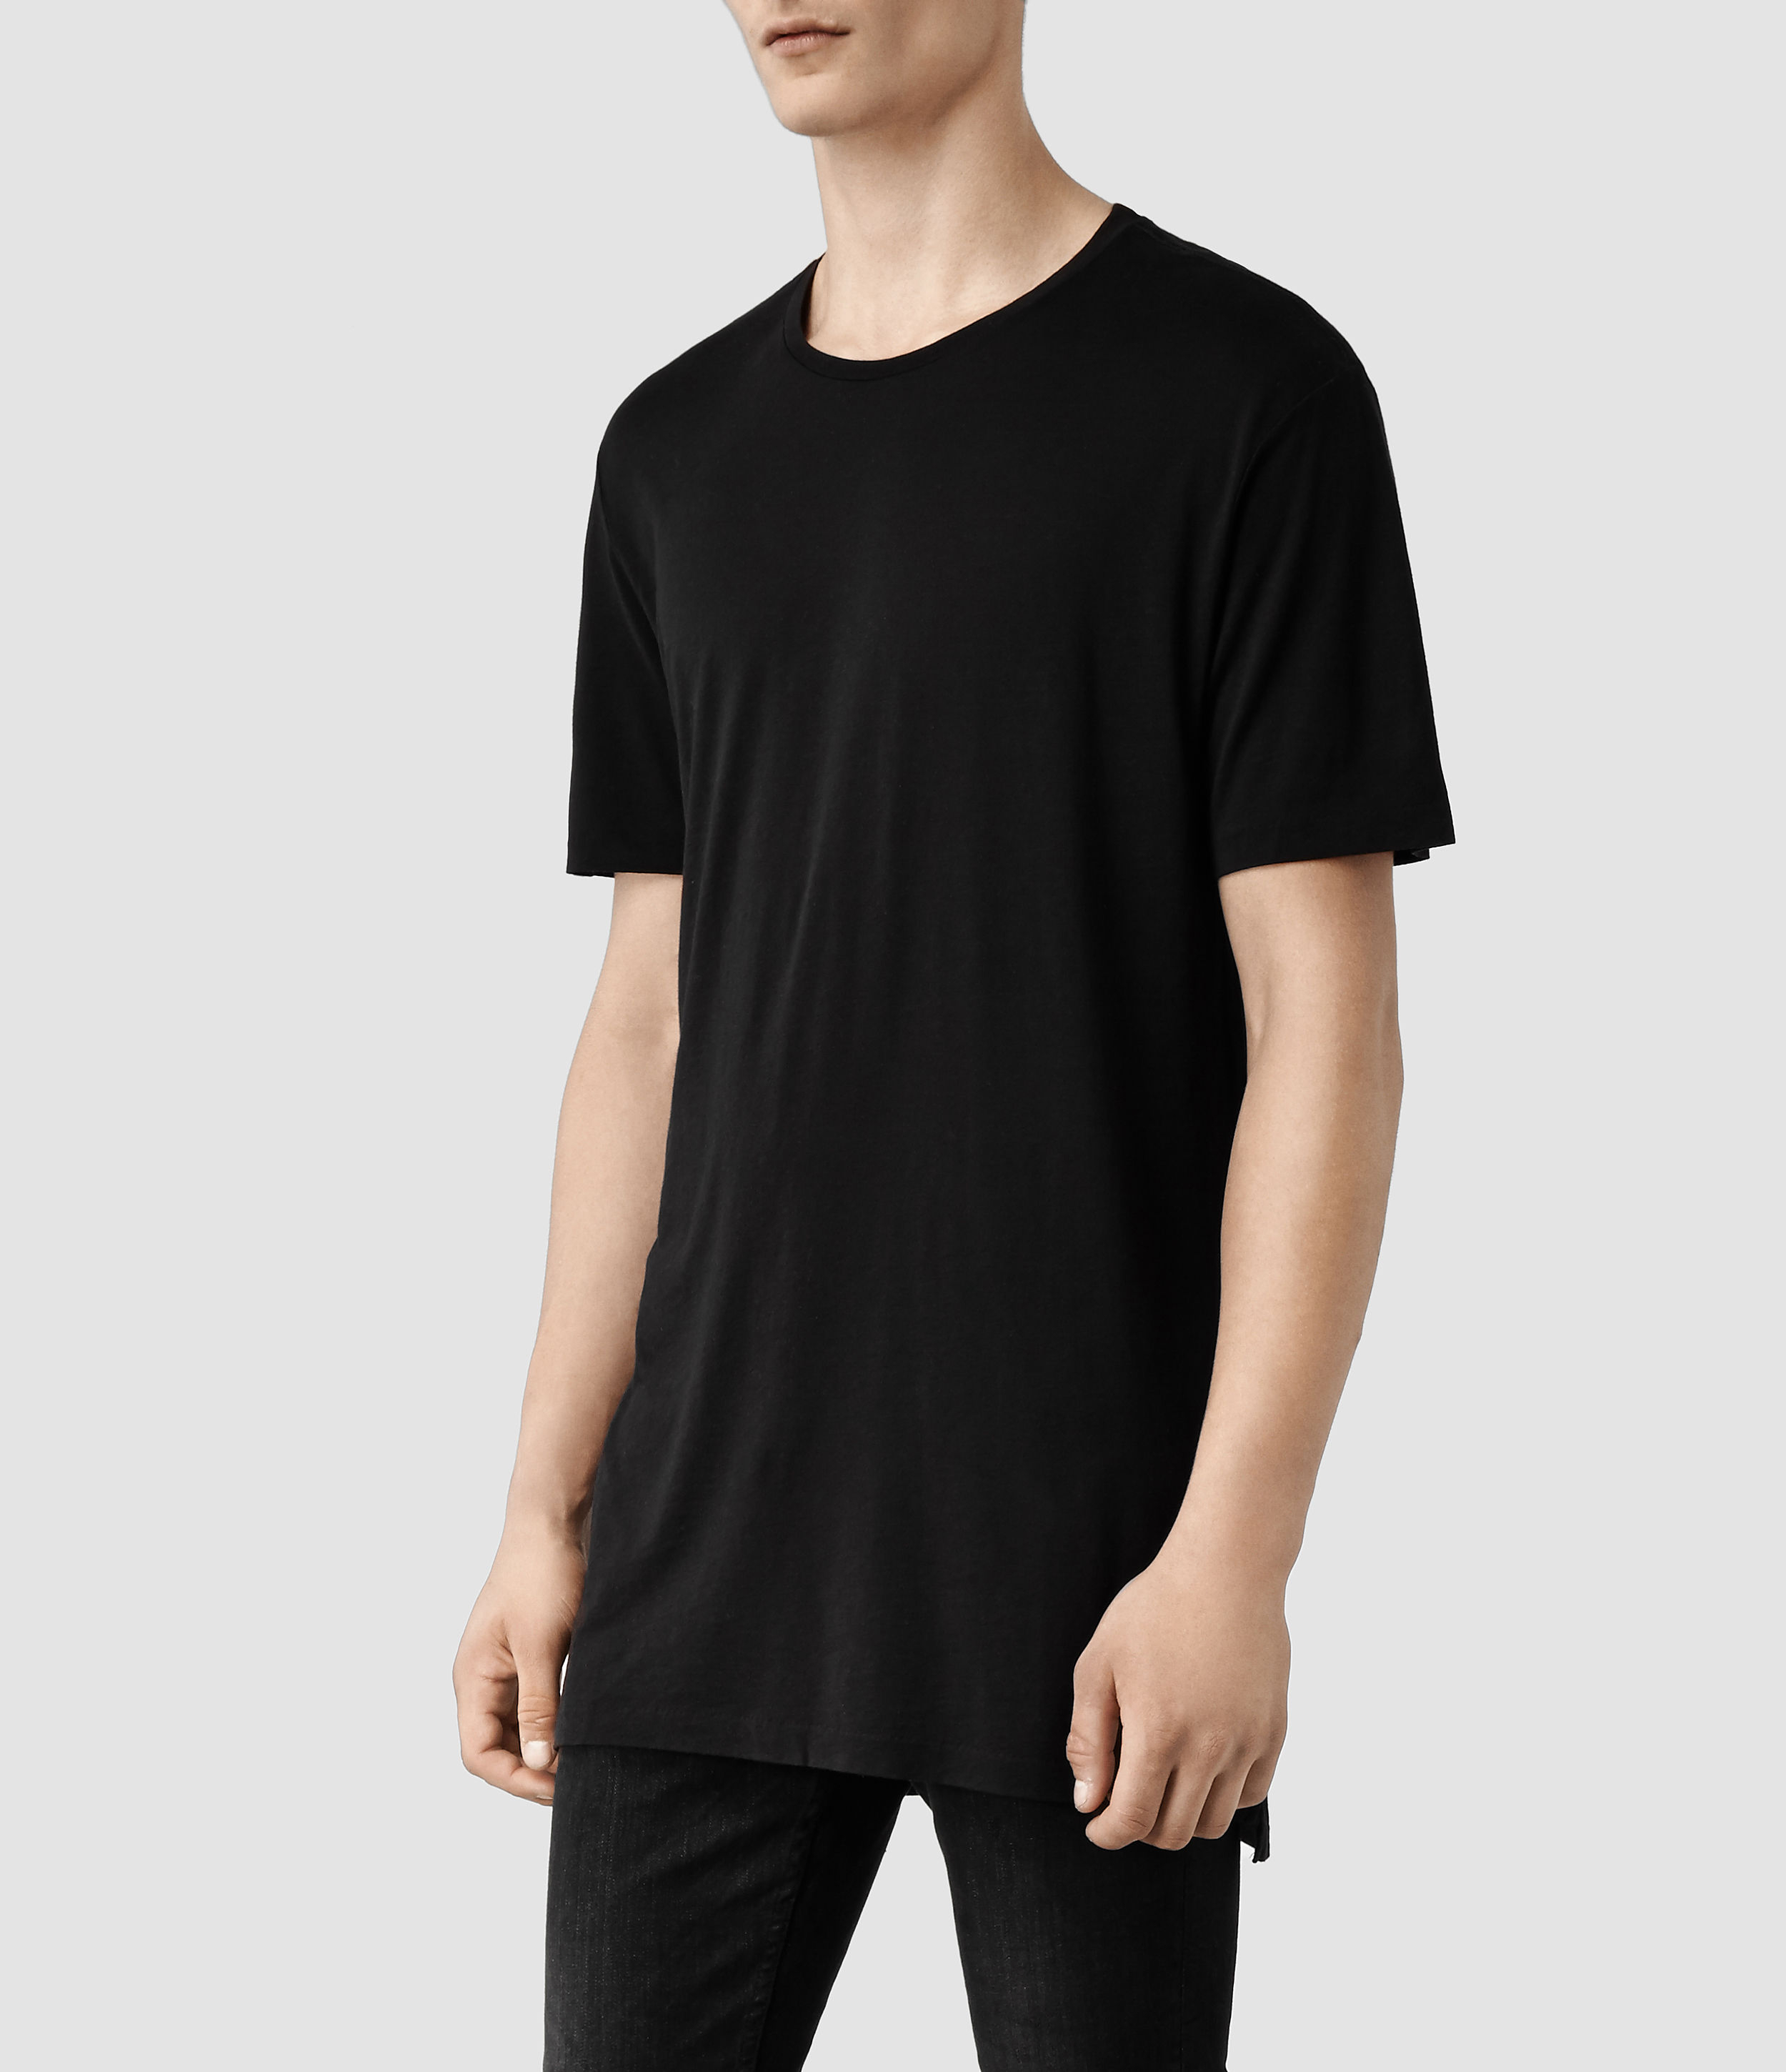 Lyst - Allsaints Tower Crew T-Shirt in Black for Men